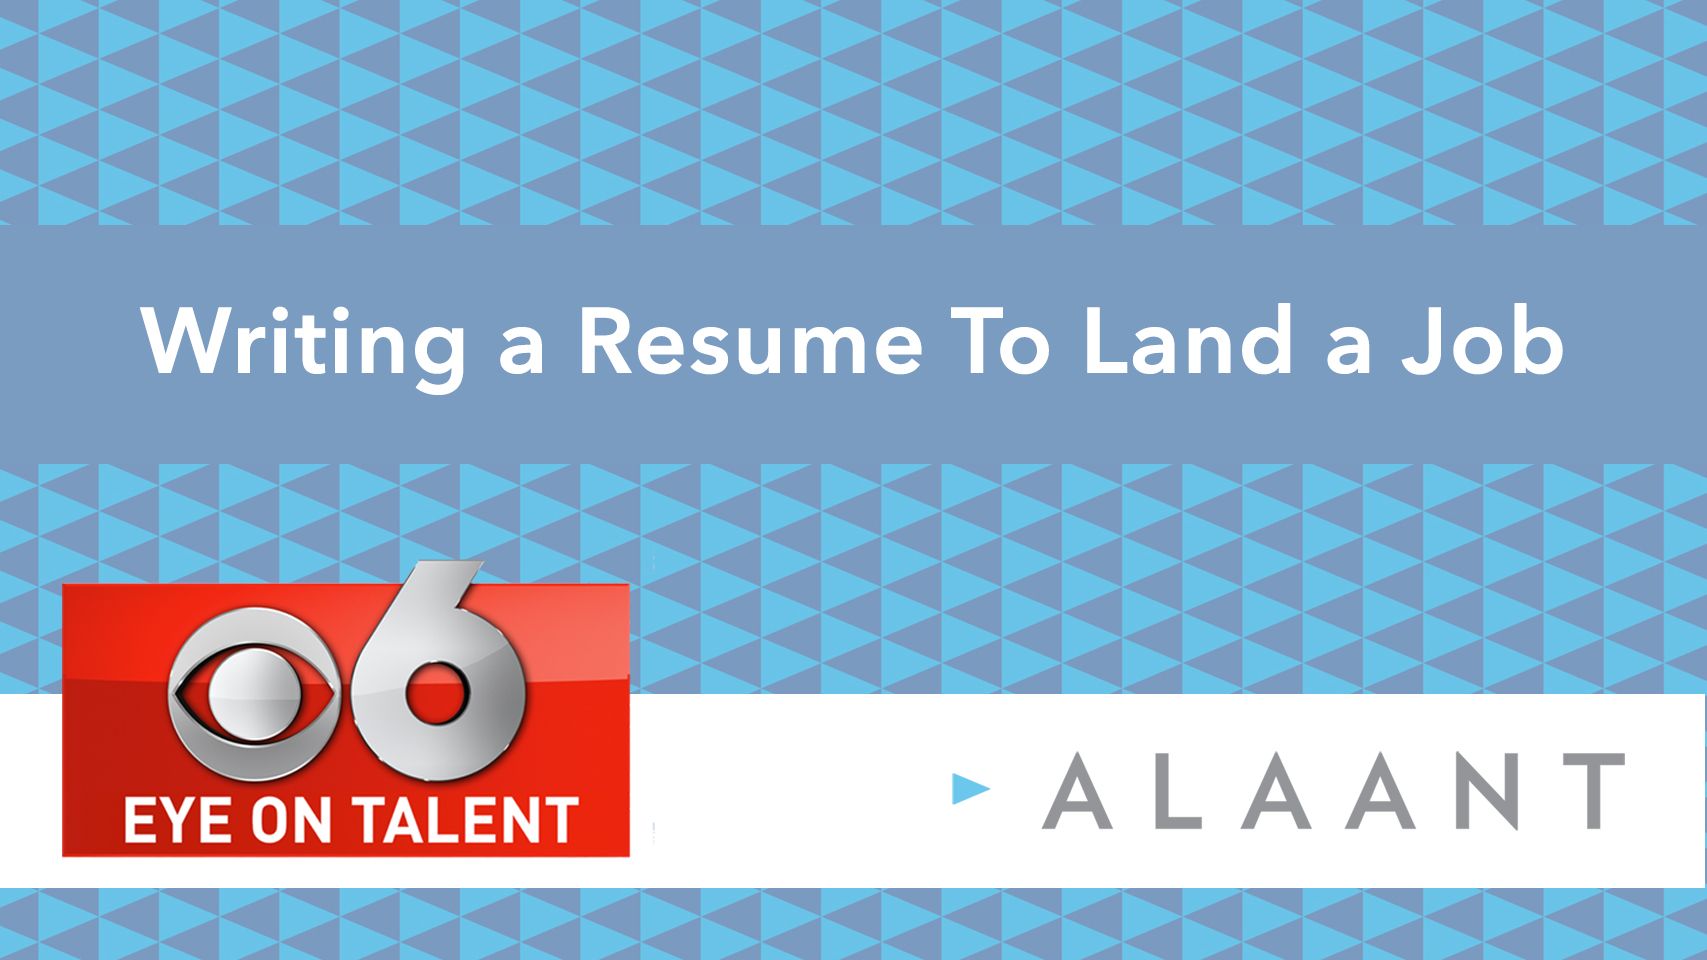 Alaant Eye on Talent Writing a Resume To Land a Job